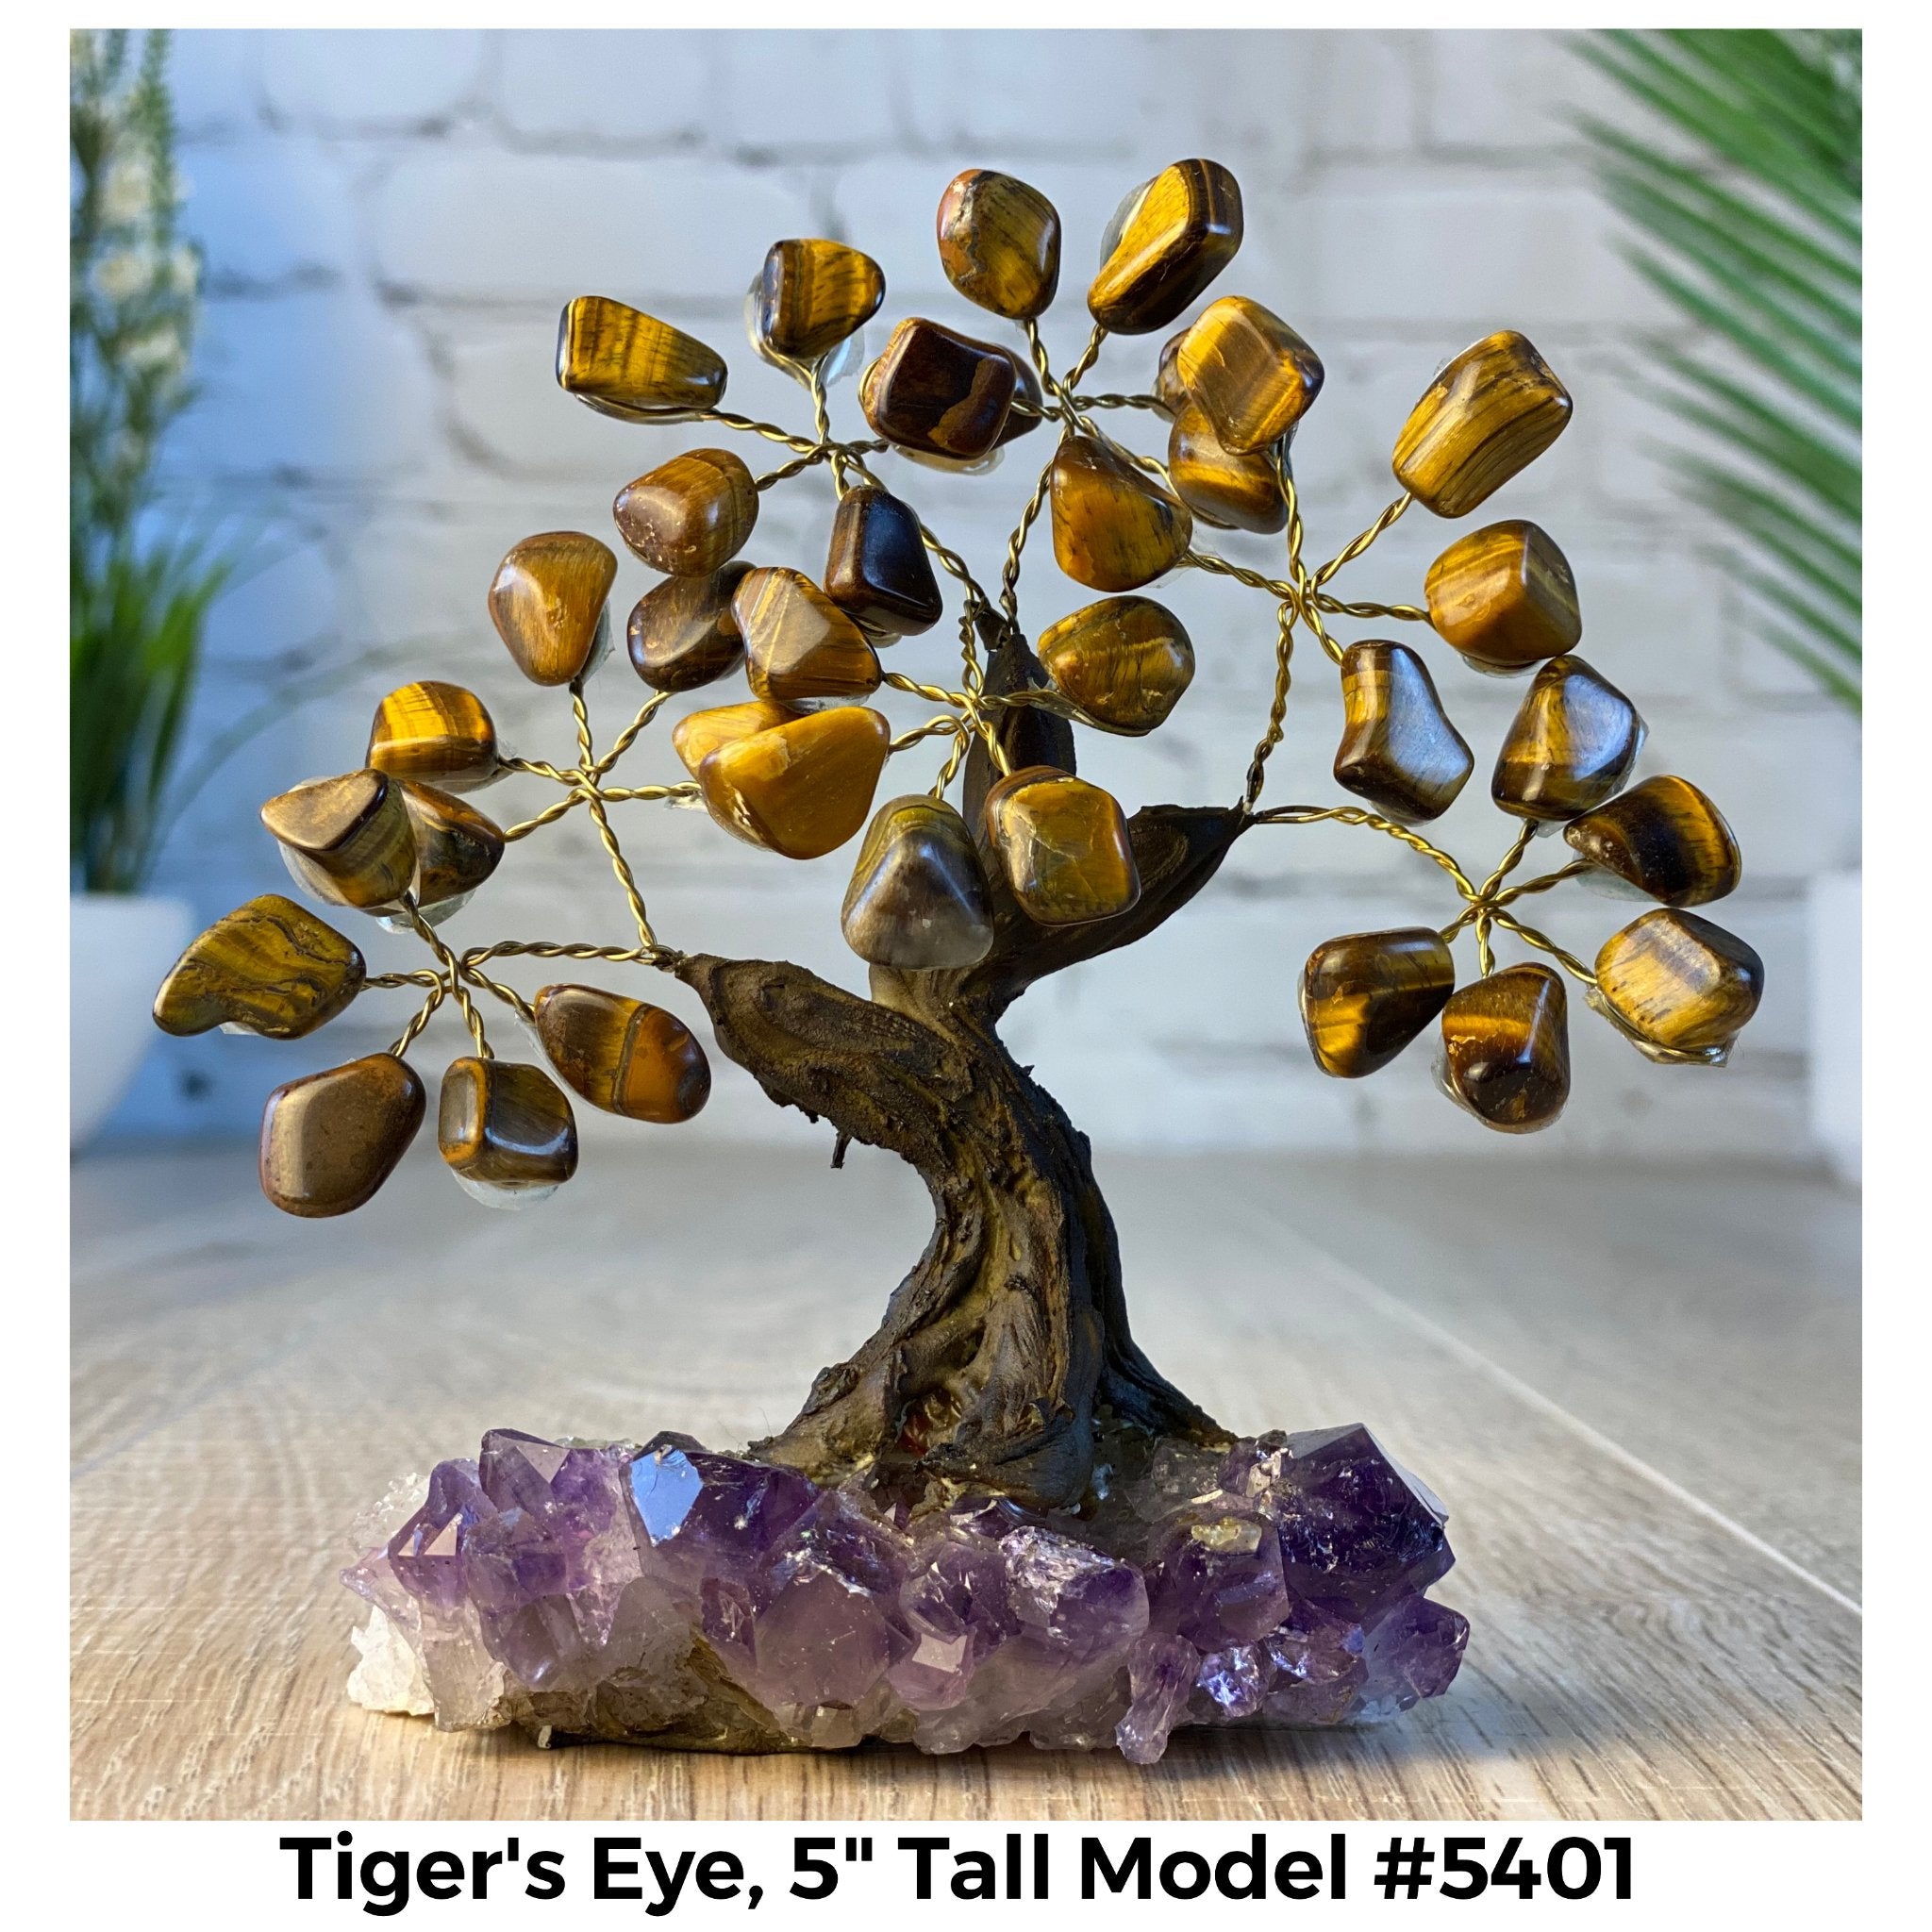 Tiger's Eye 5" Tall Handmade Gemstone Tree on a Crystal base, 35 Gems #5401TIGE - Brazil GemsBrazil GemsTiger's Eye 5" Tall Handmade Gemstone Tree on a Crystal base, 35 Gems #5401TIGEGemstone Trees5401TIGE